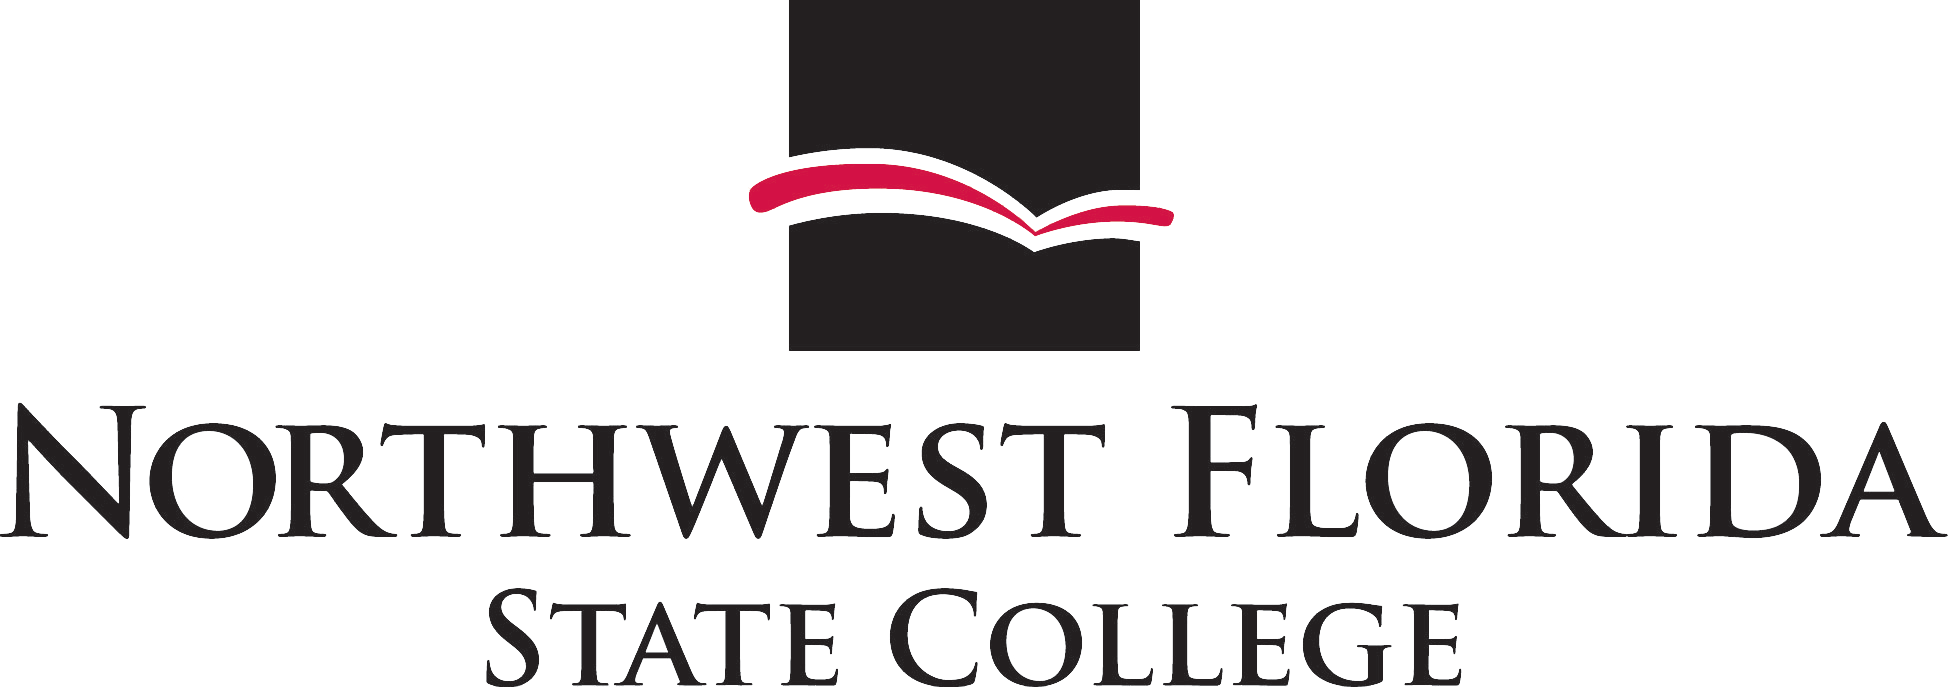 Northwest Florida State College Logo